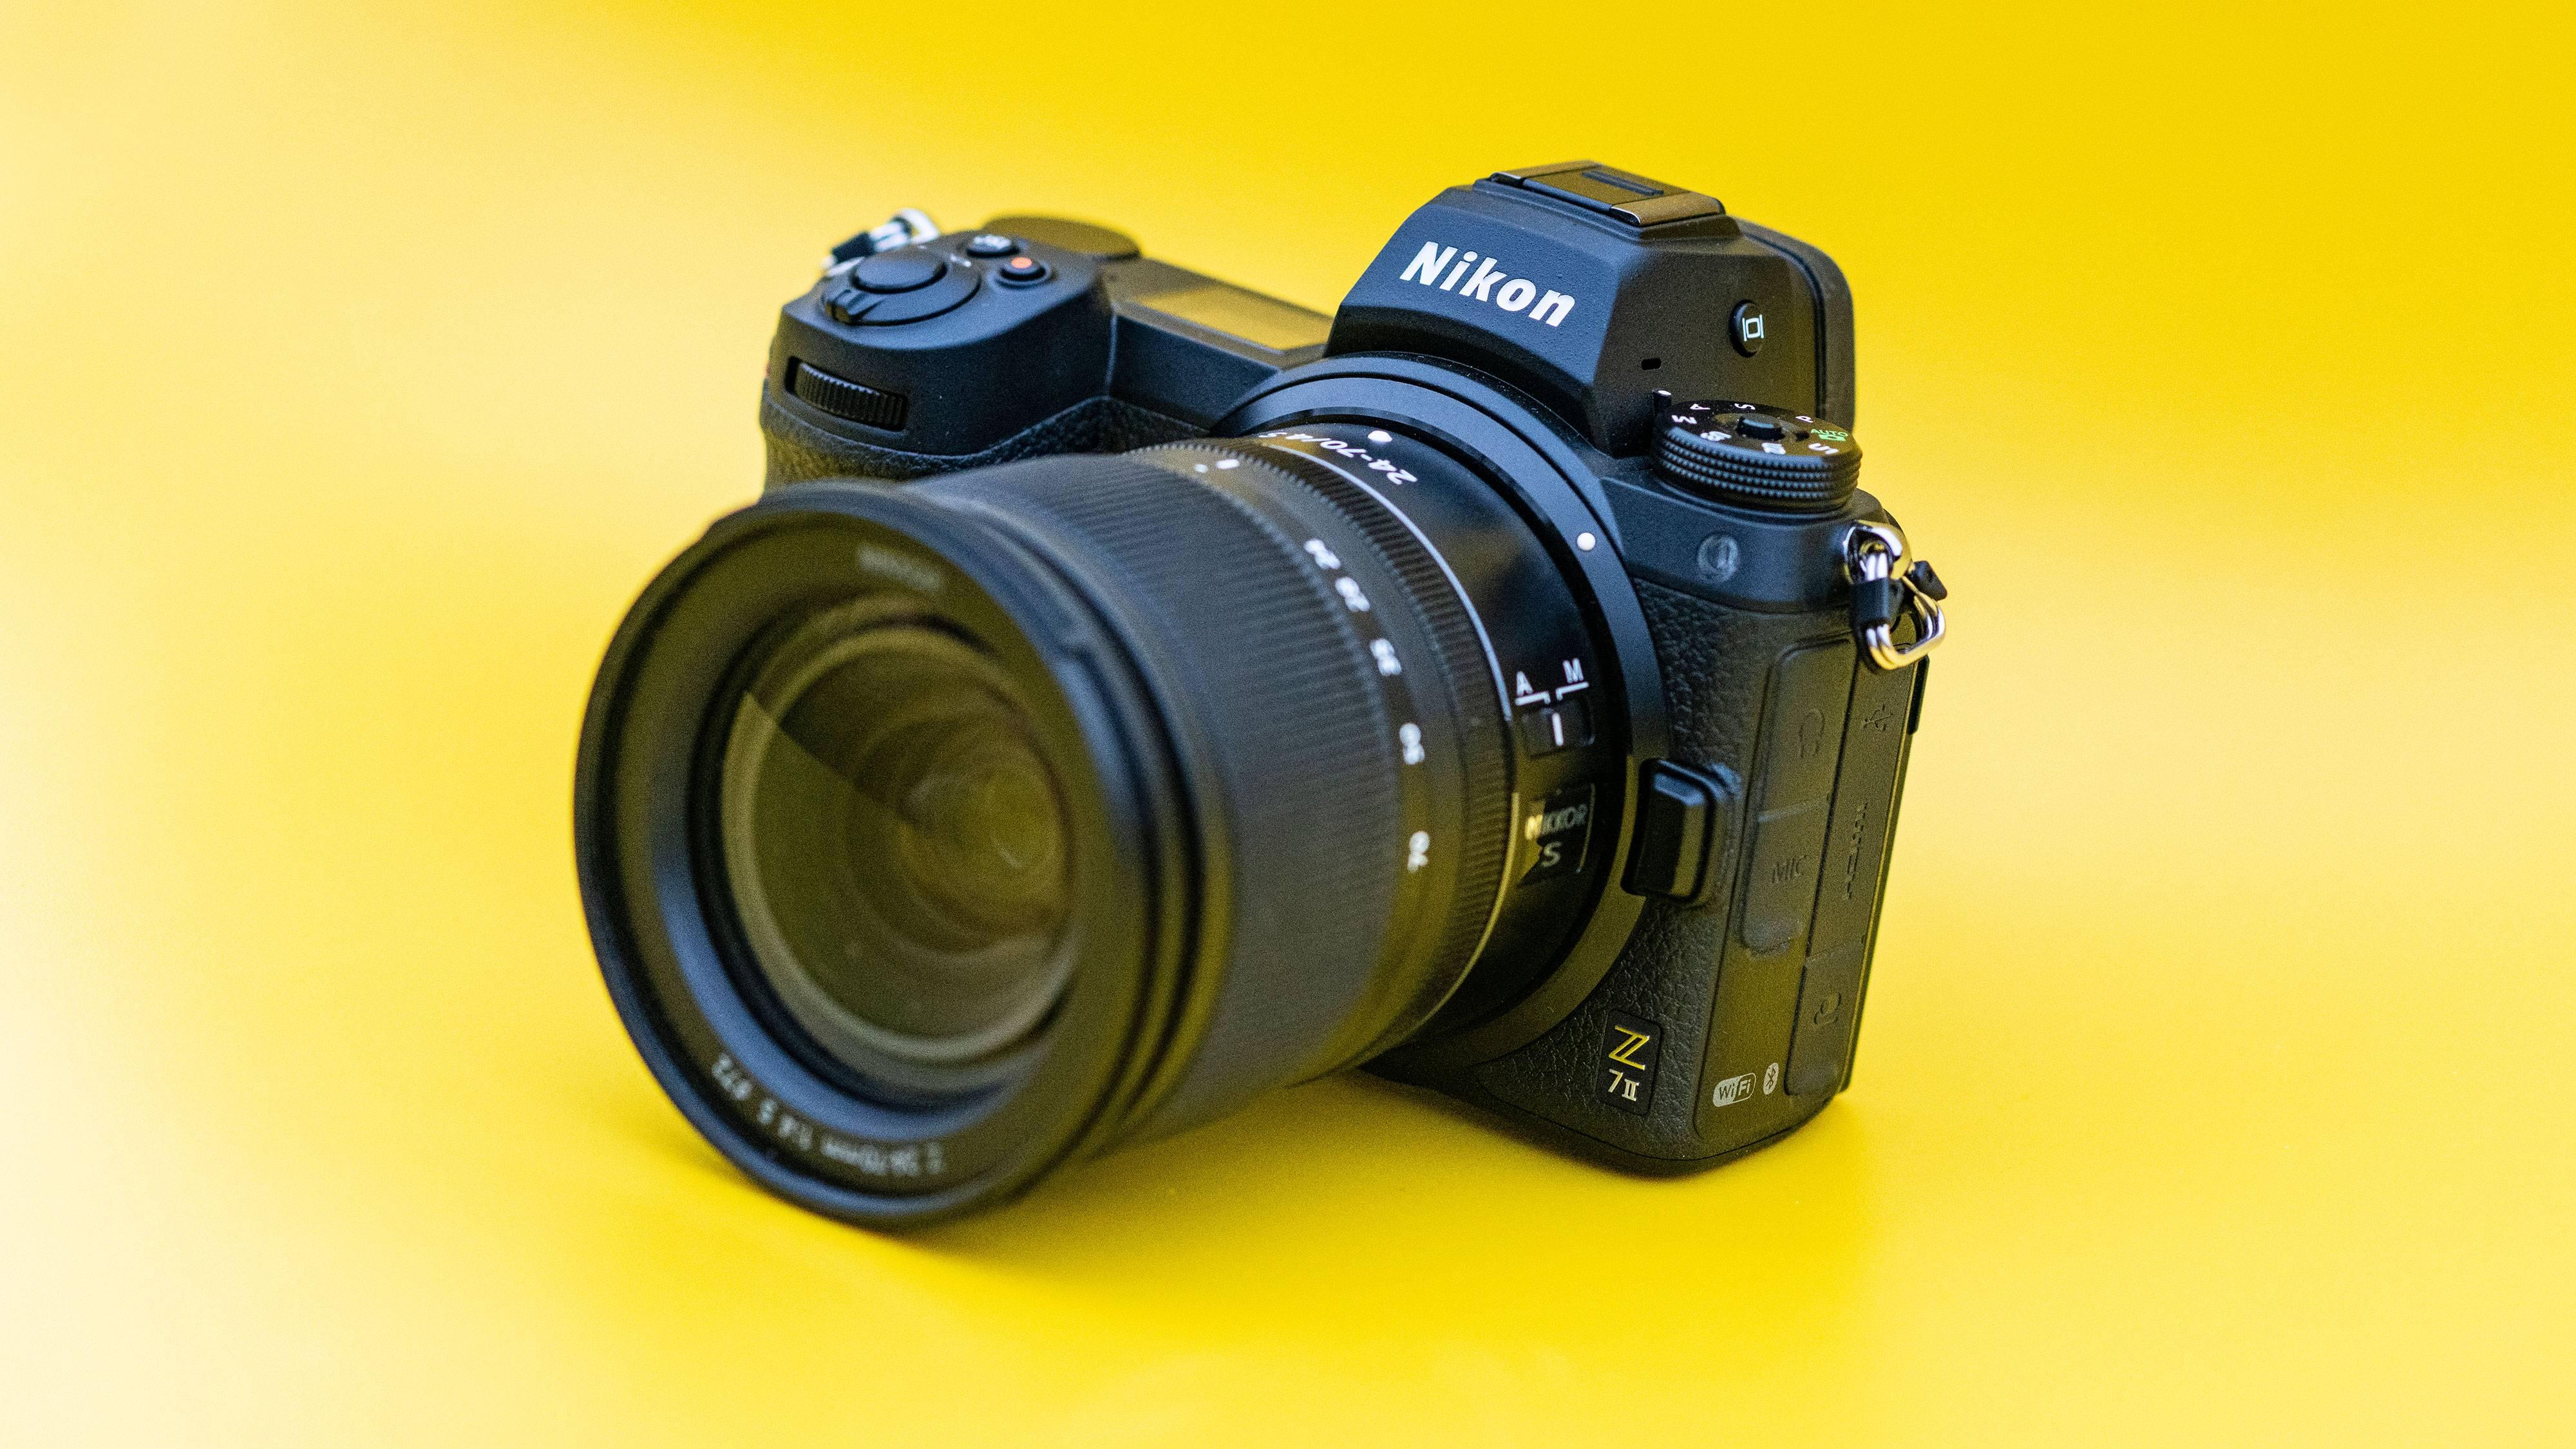 Nikon Camera Evaluation - An Easy Review of the Nikon D90